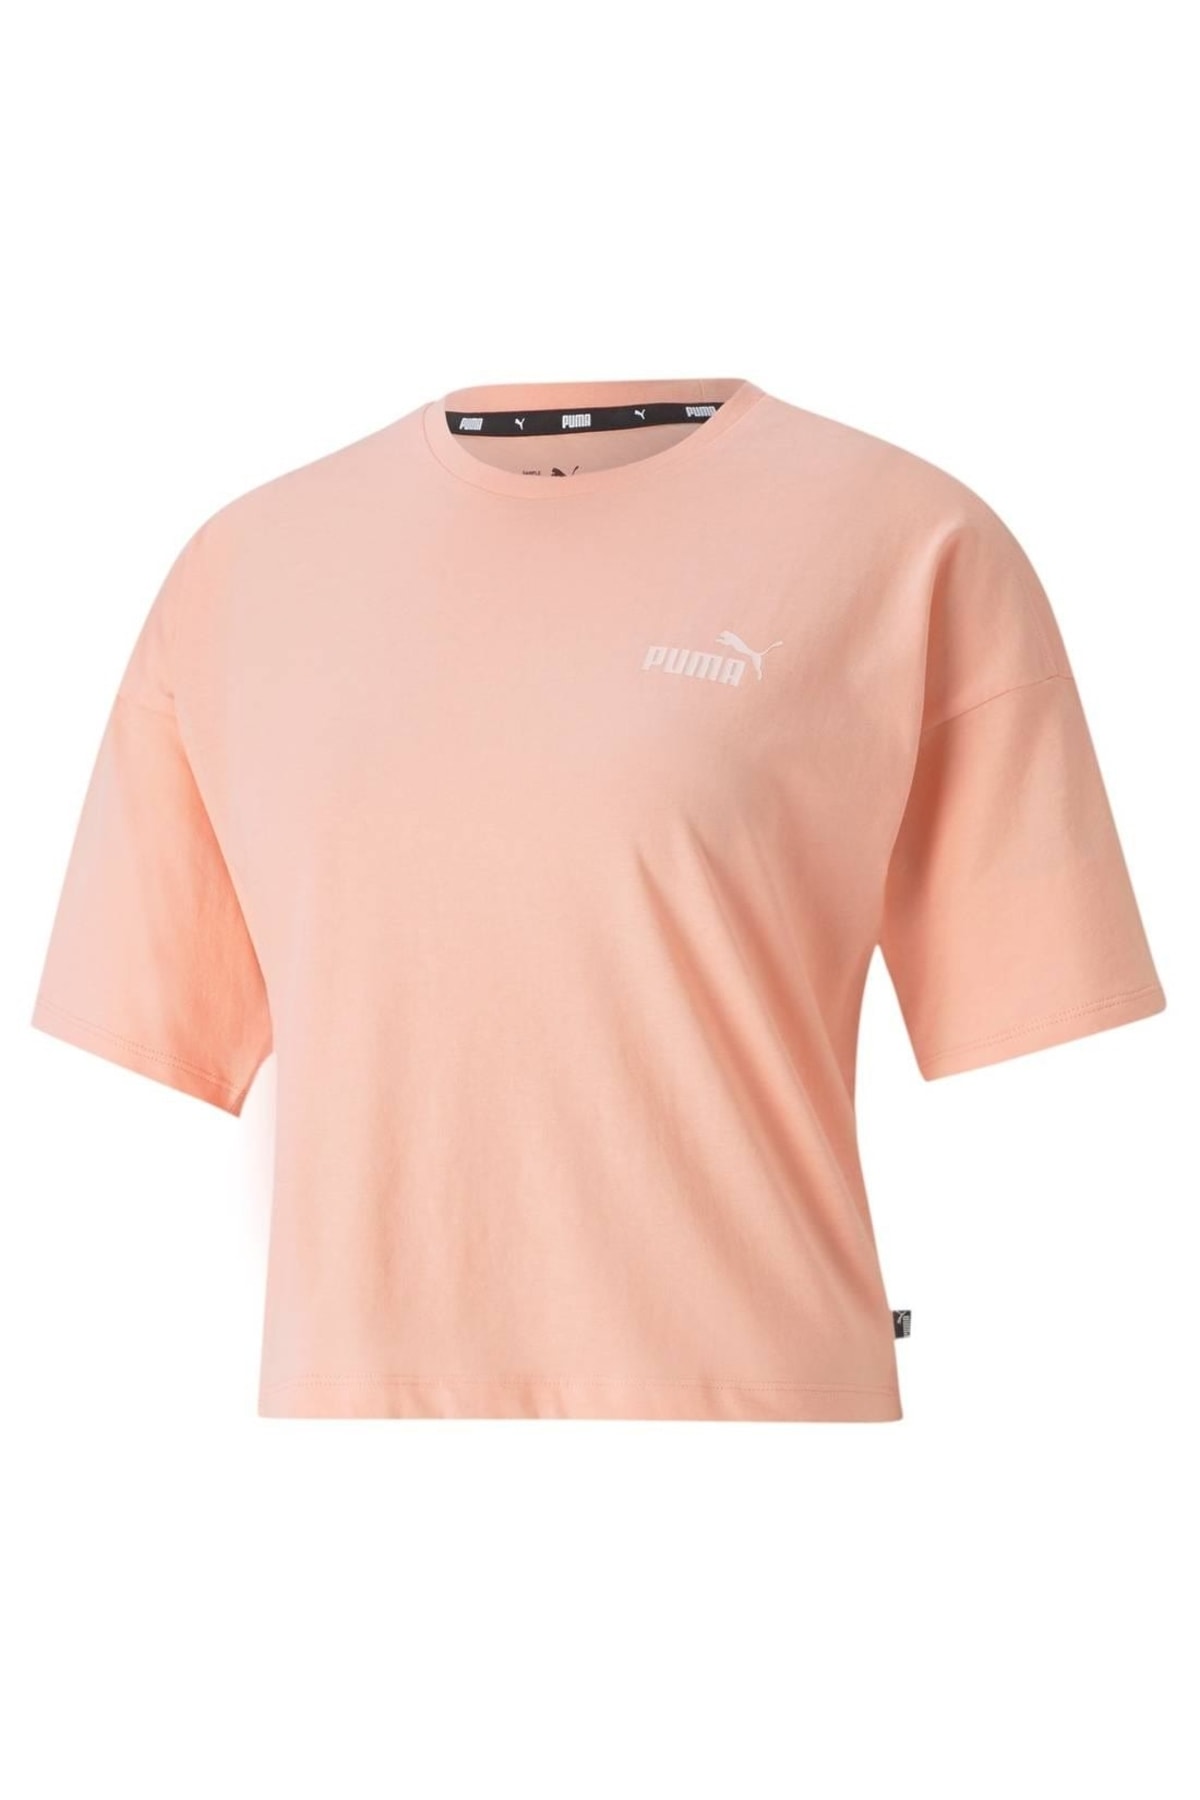 Puma T-Shirt Rosa Regular Fit Fast ausverkauft